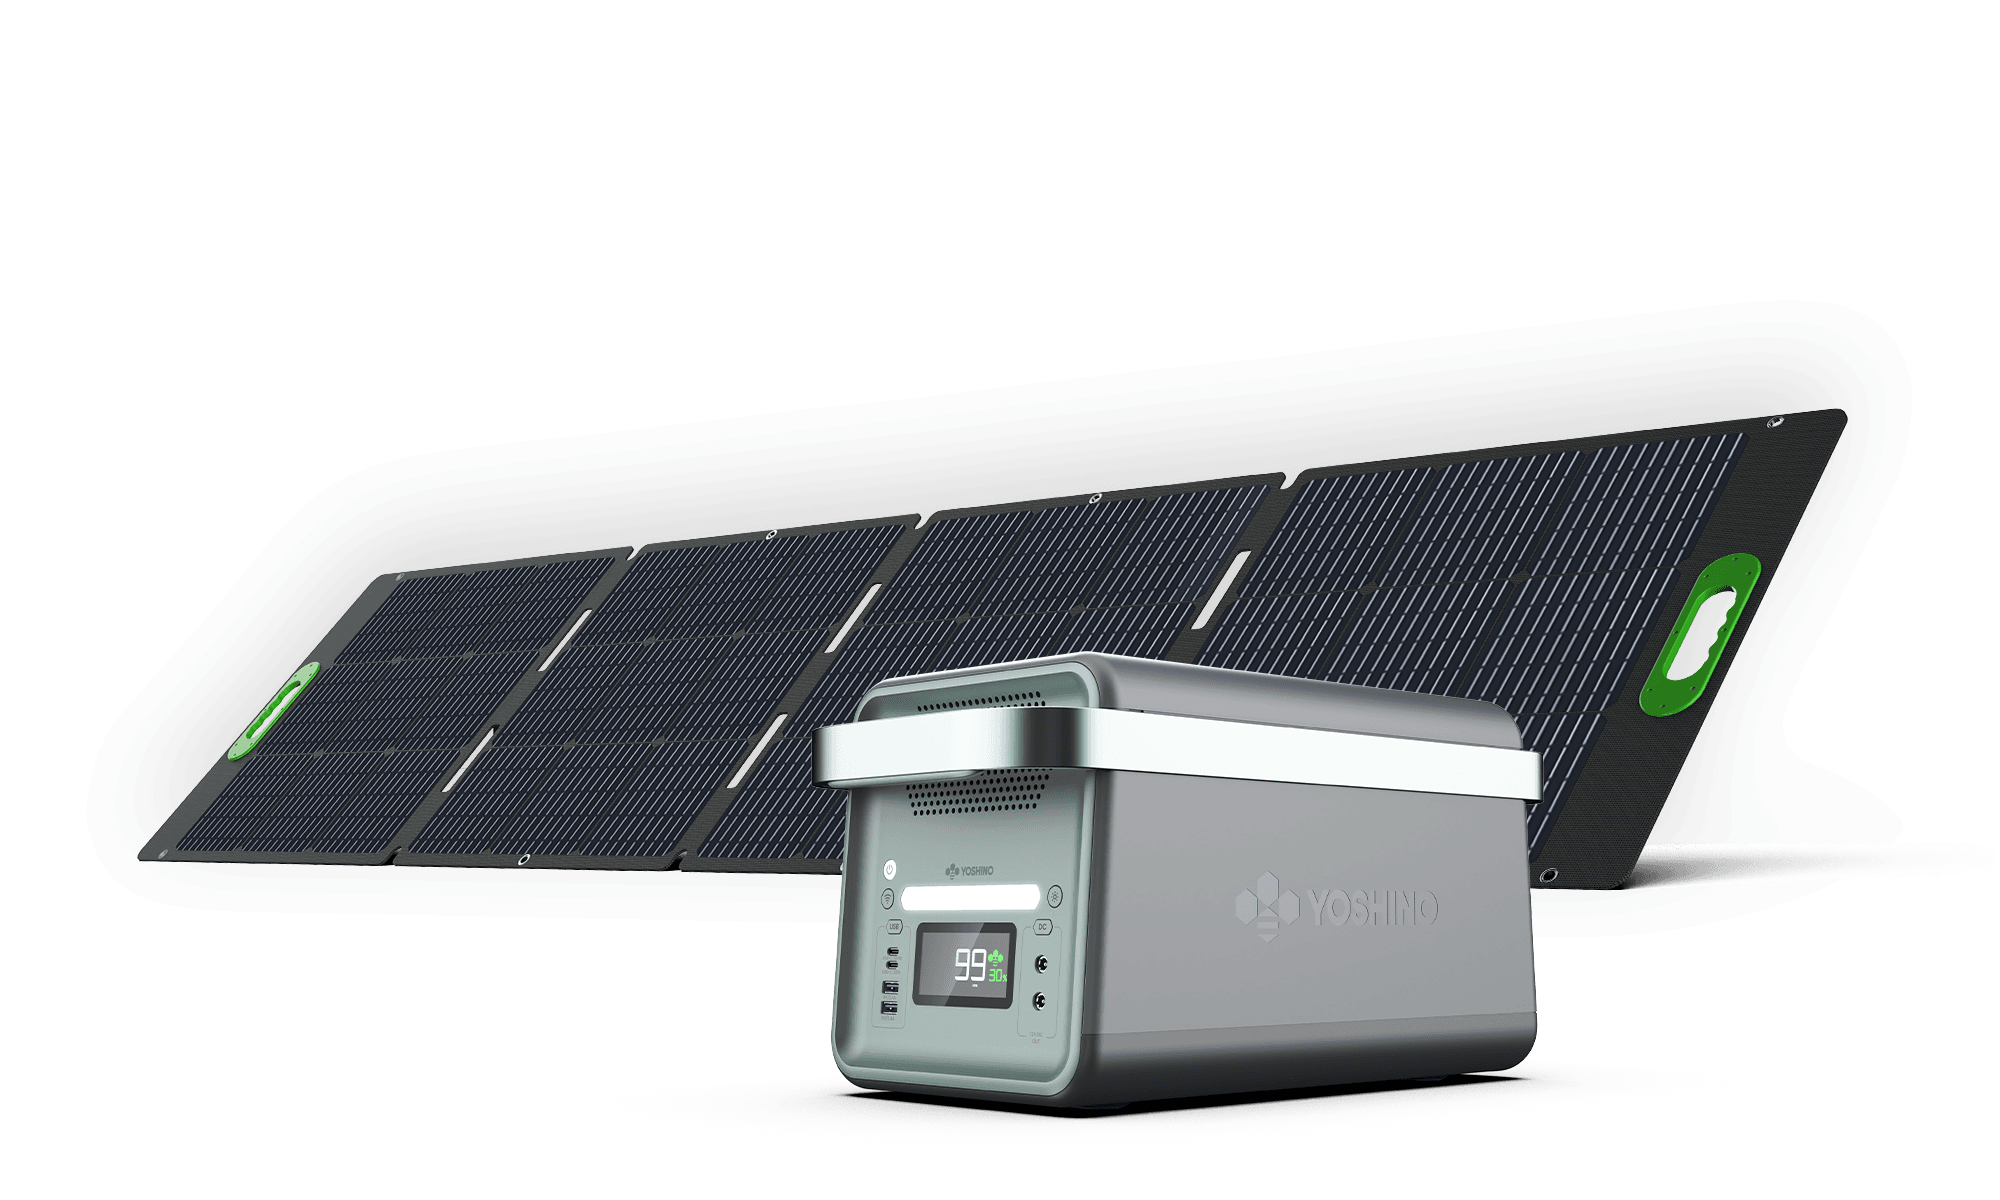 Portable 3000w 48v 65ah Solar Generator Power Station Backup 3120Wh NEW